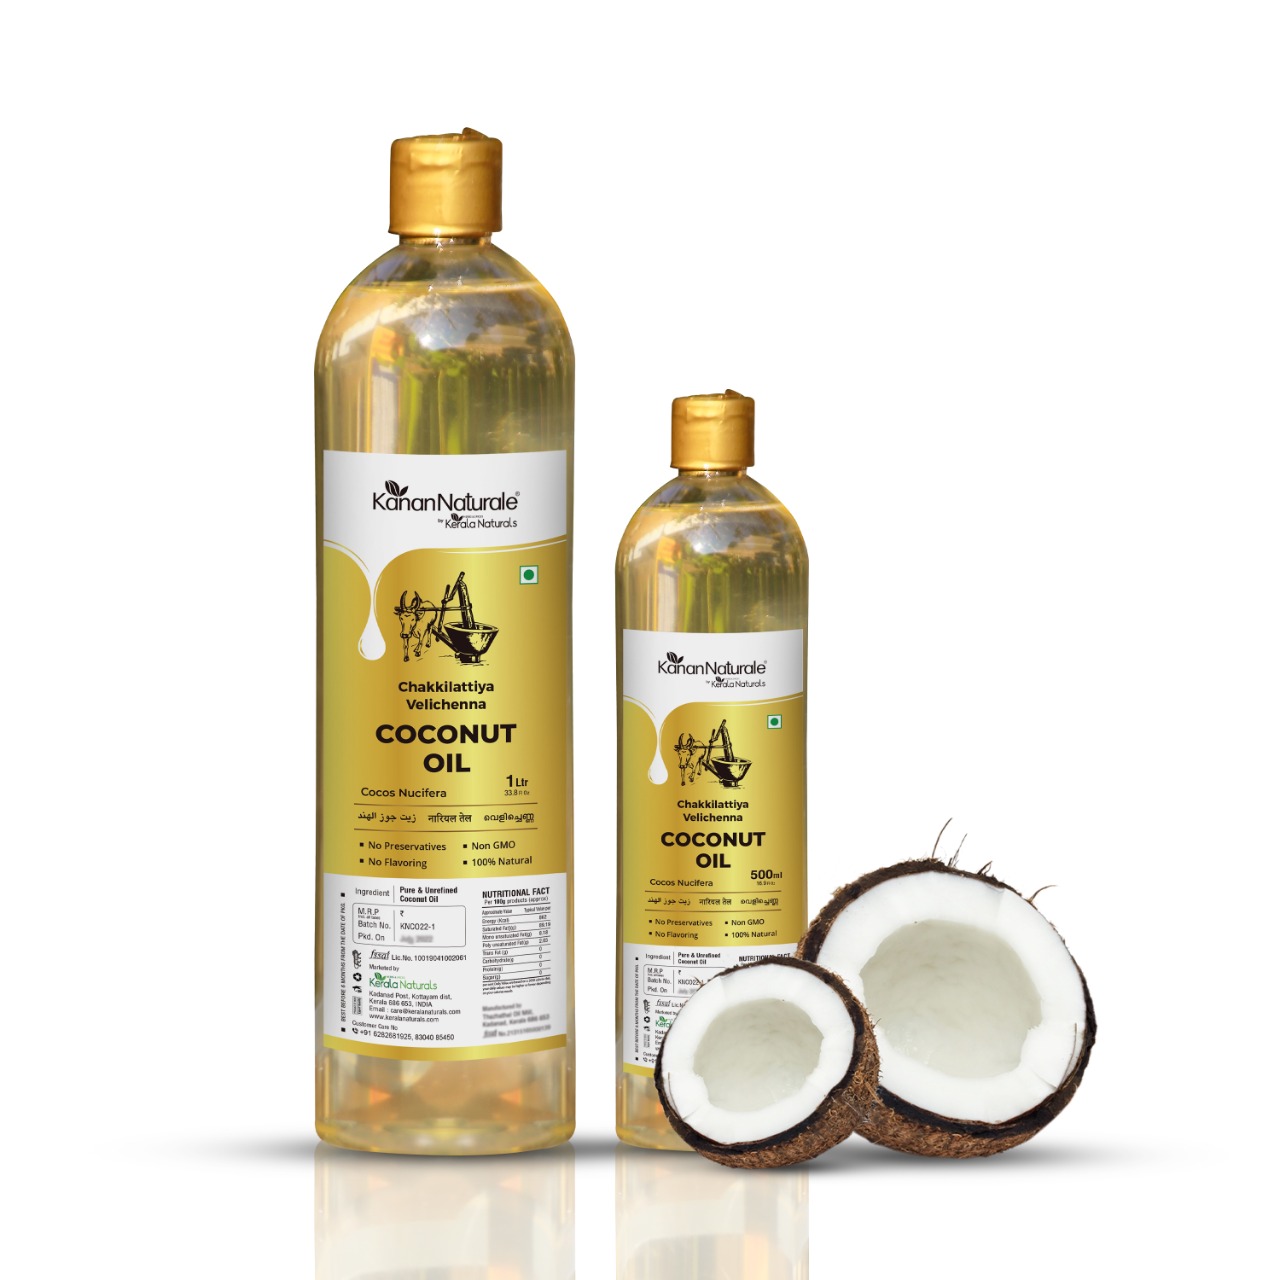 Buy Kanan Naturale Coconut Oil at Best Price Online